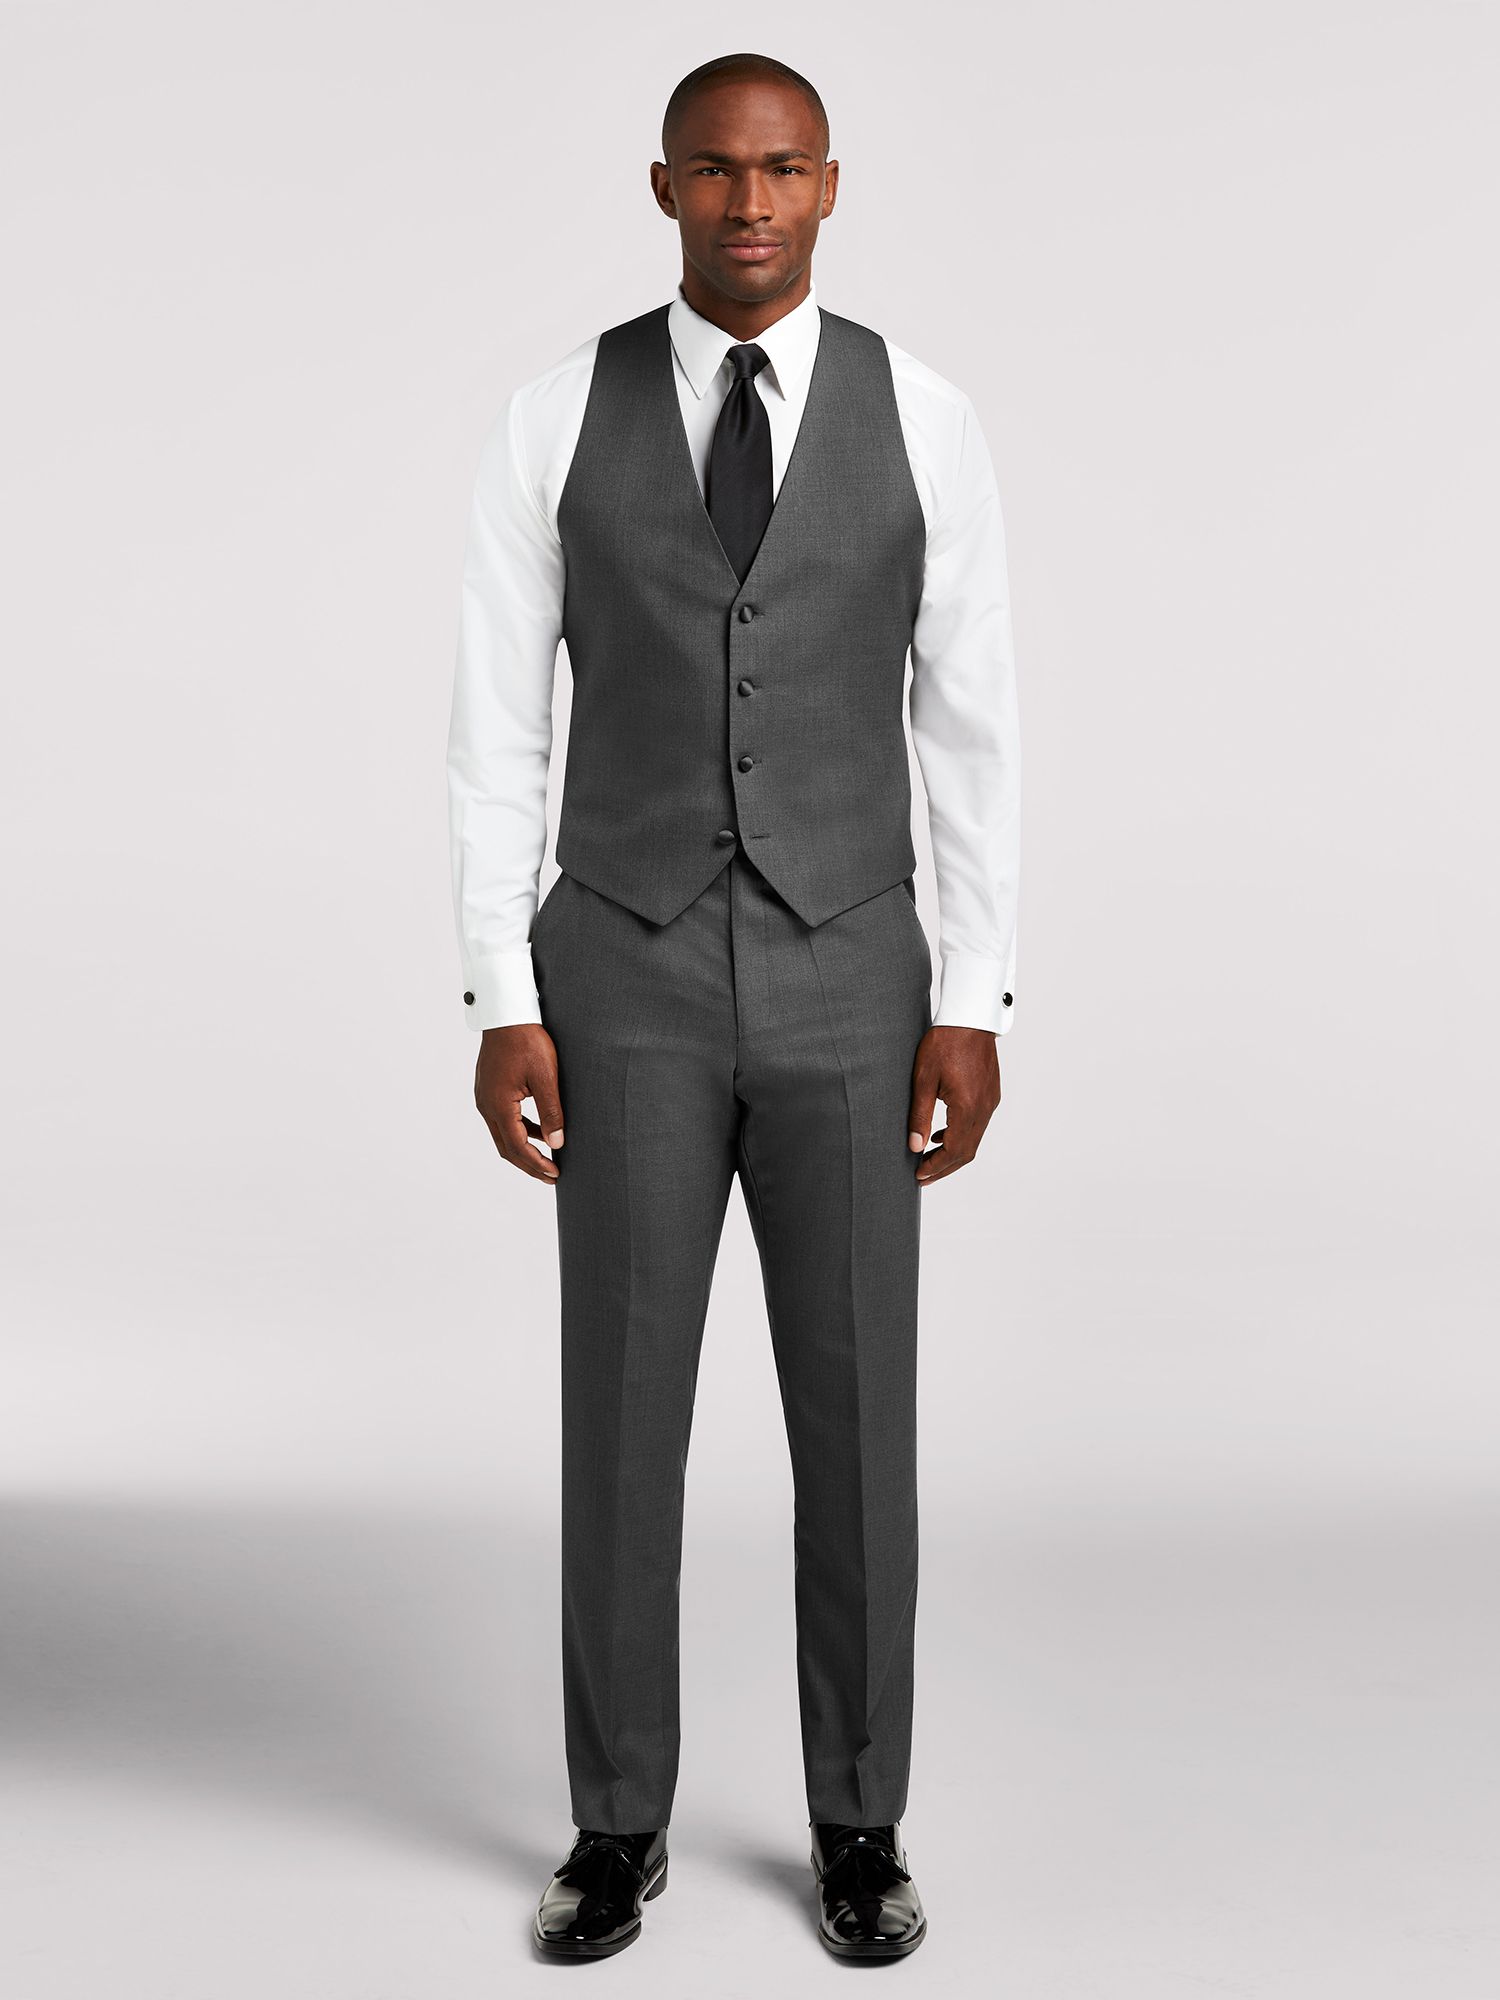 Grey Notch Lapel Tuxedo by Joseph Abboud | Tuxedo Rental | Moores Clothing